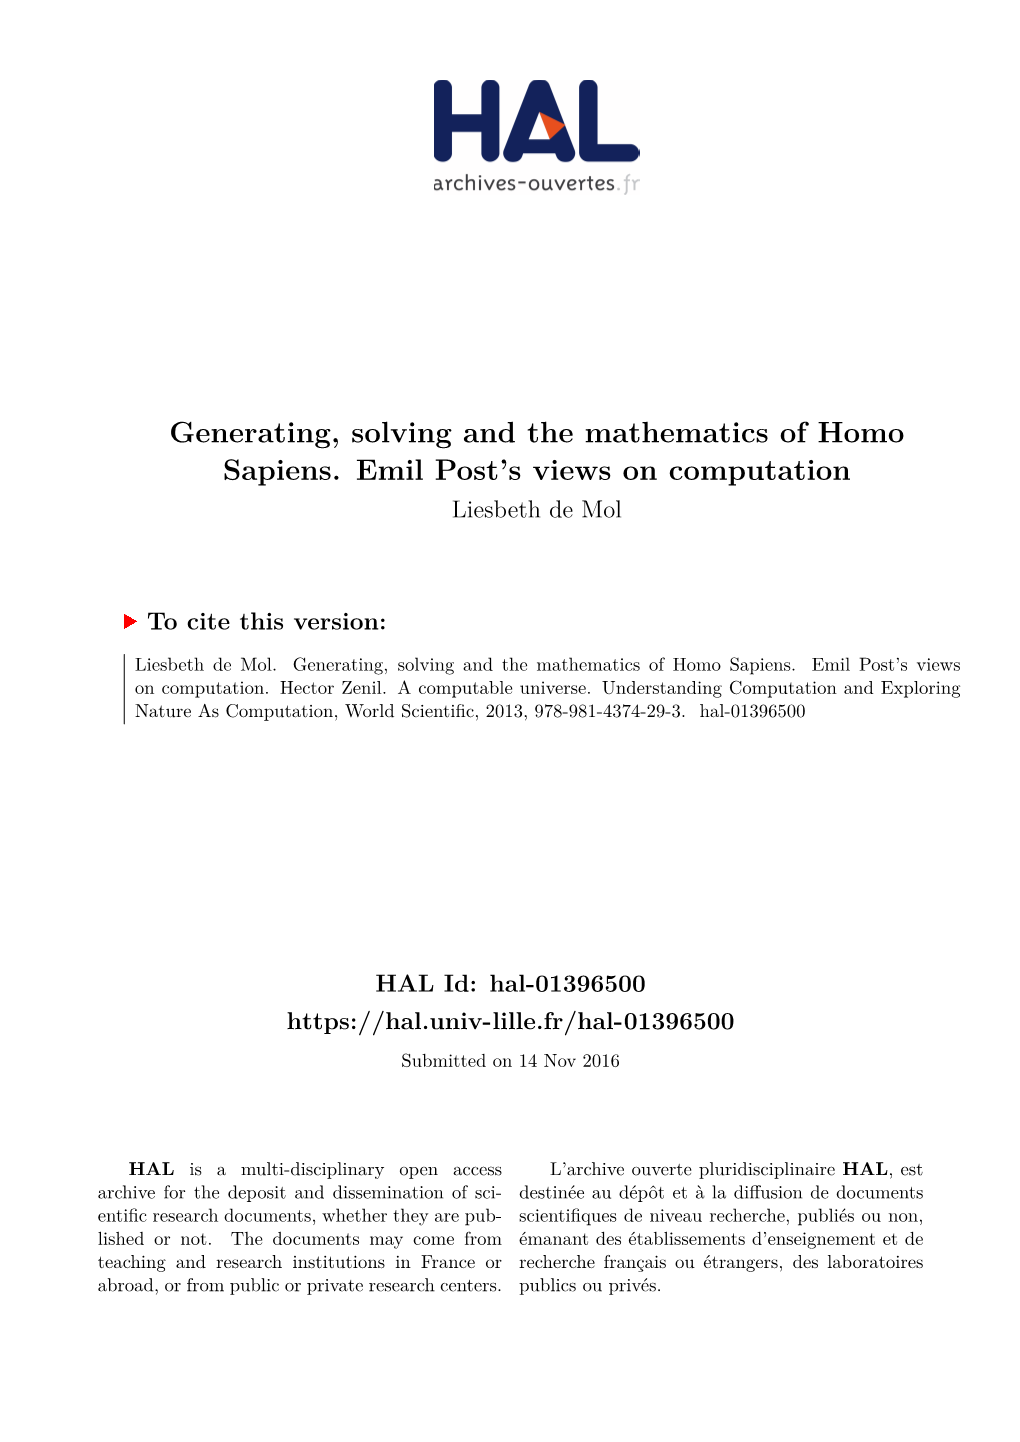 Generating, Solving and the Mathematics of Homo Sapiens